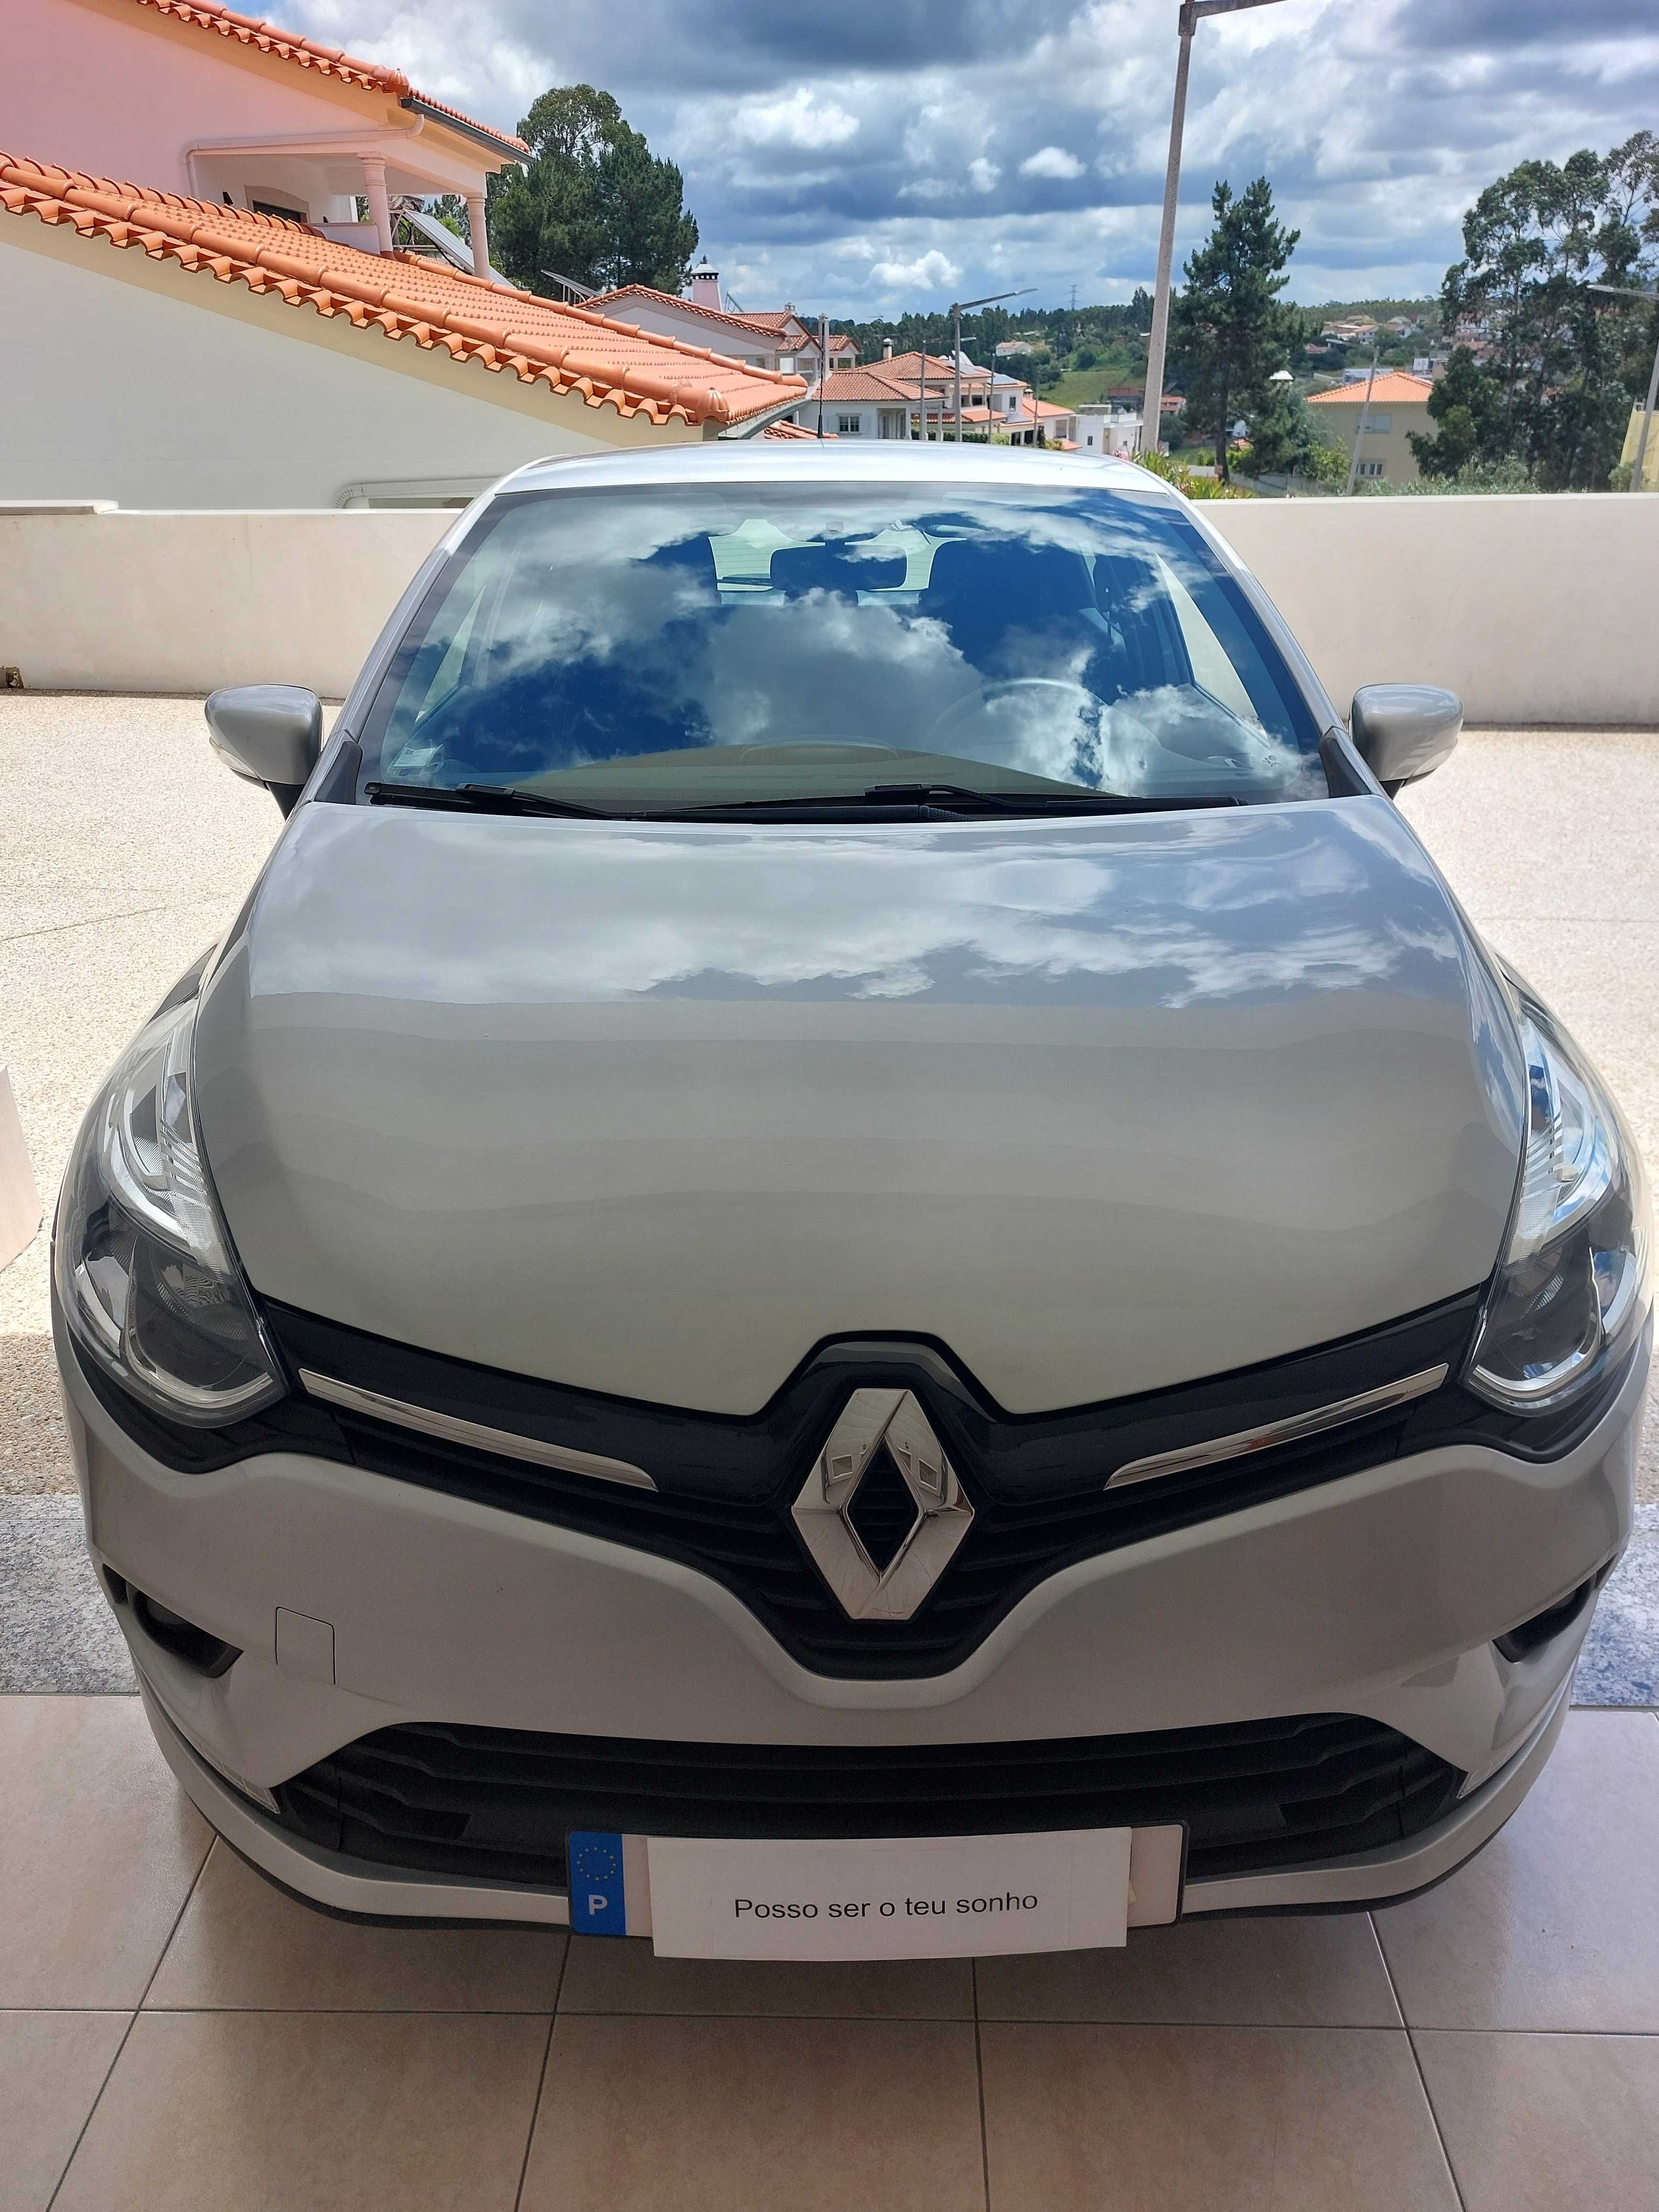 CLIO  Renault 1,5 Dci so 41.600 kms RARO - IMPECAVEL